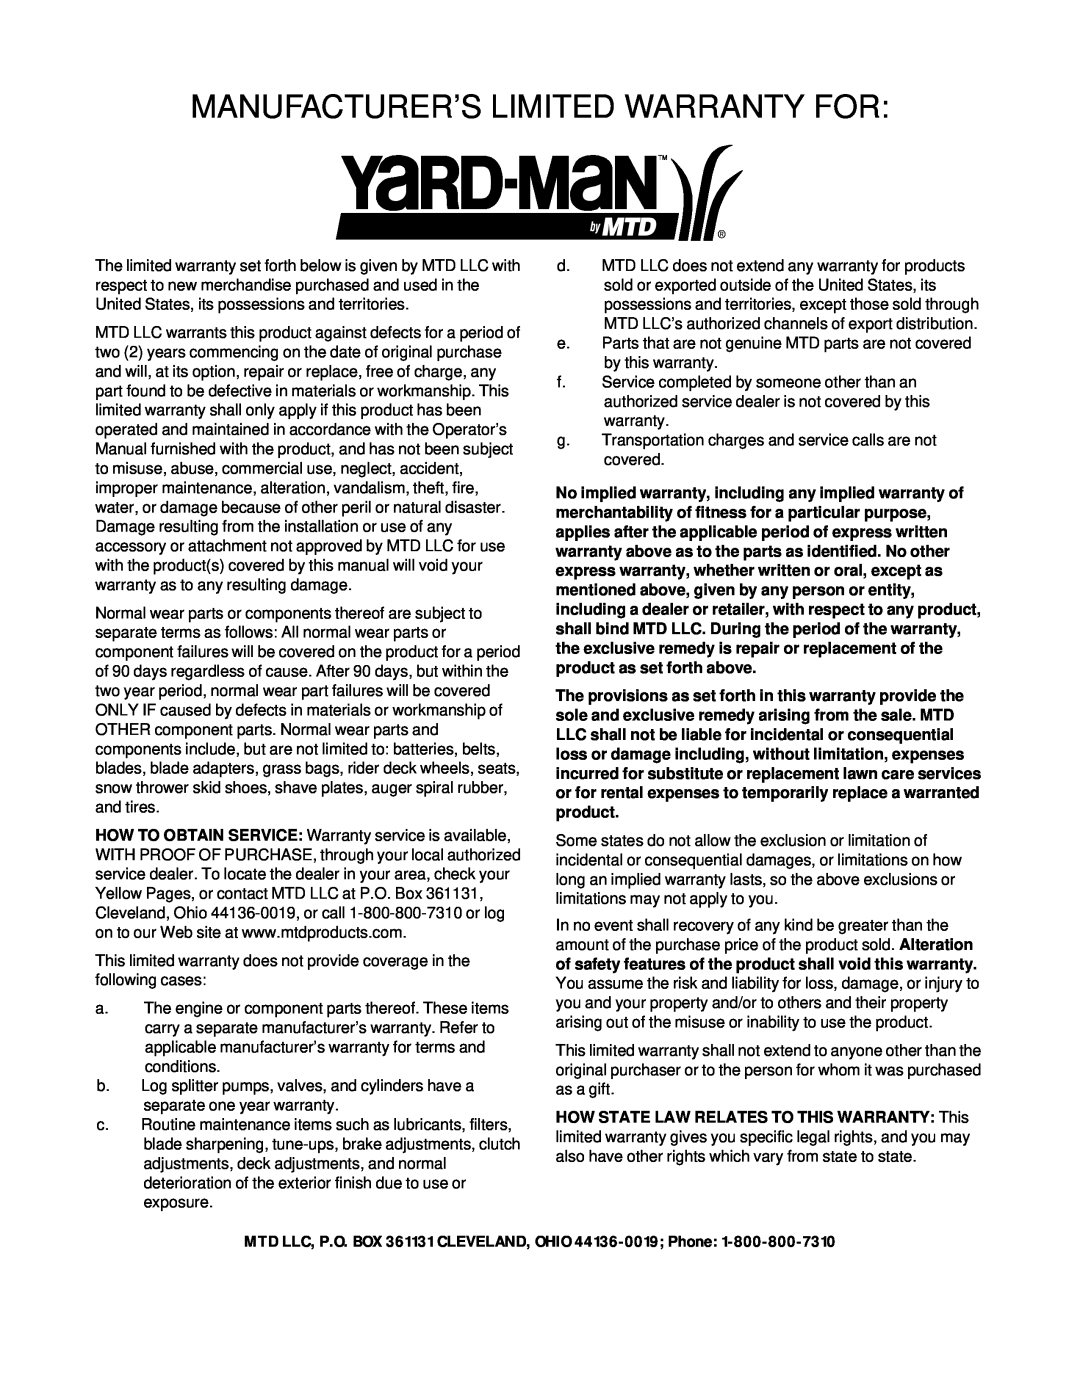 Yard-Man 437 manual Manufacturer’S Limited Warranty For 